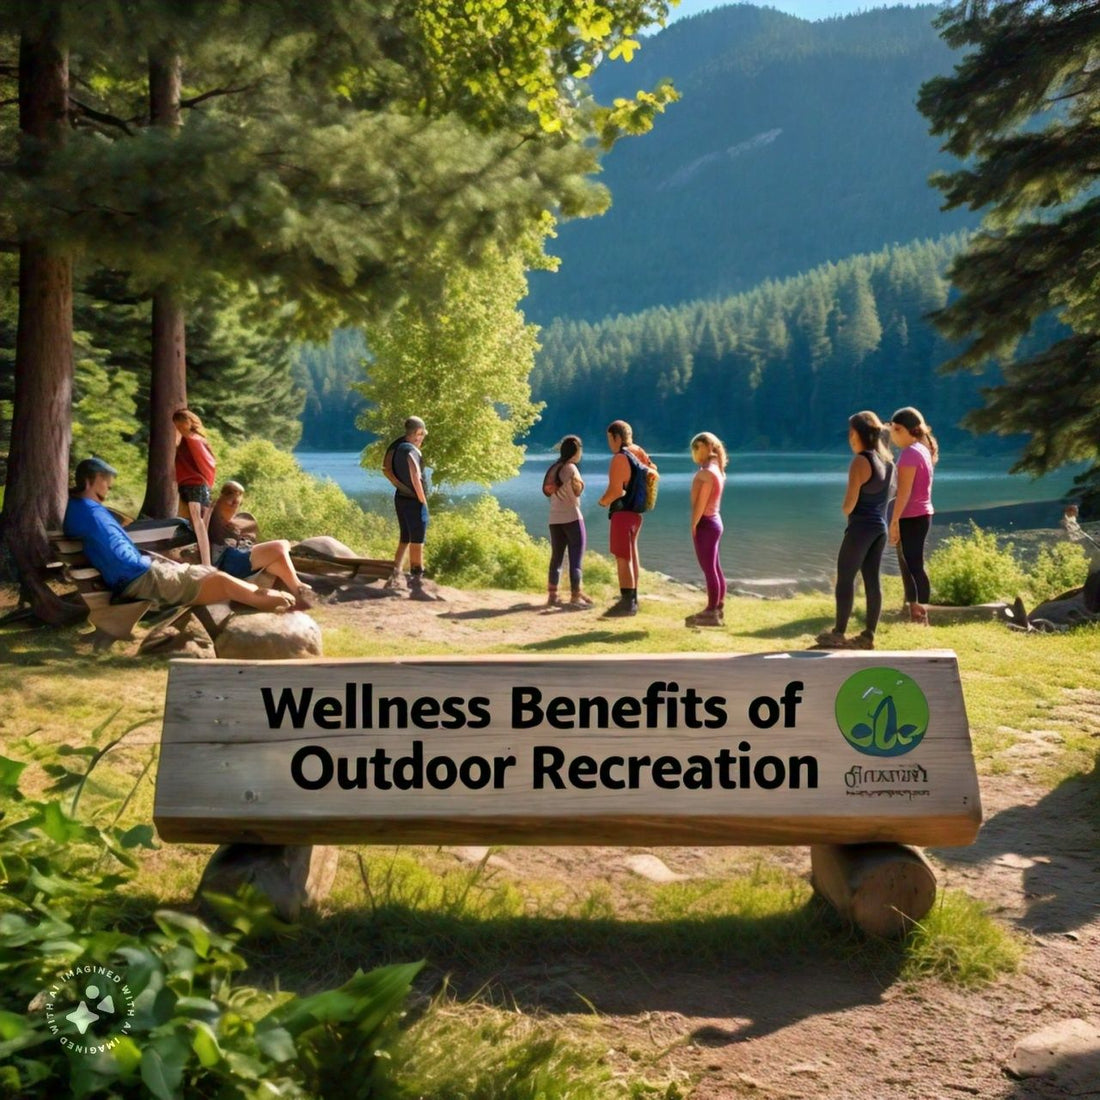 The Wellness Benefits of Outdoor Recreation